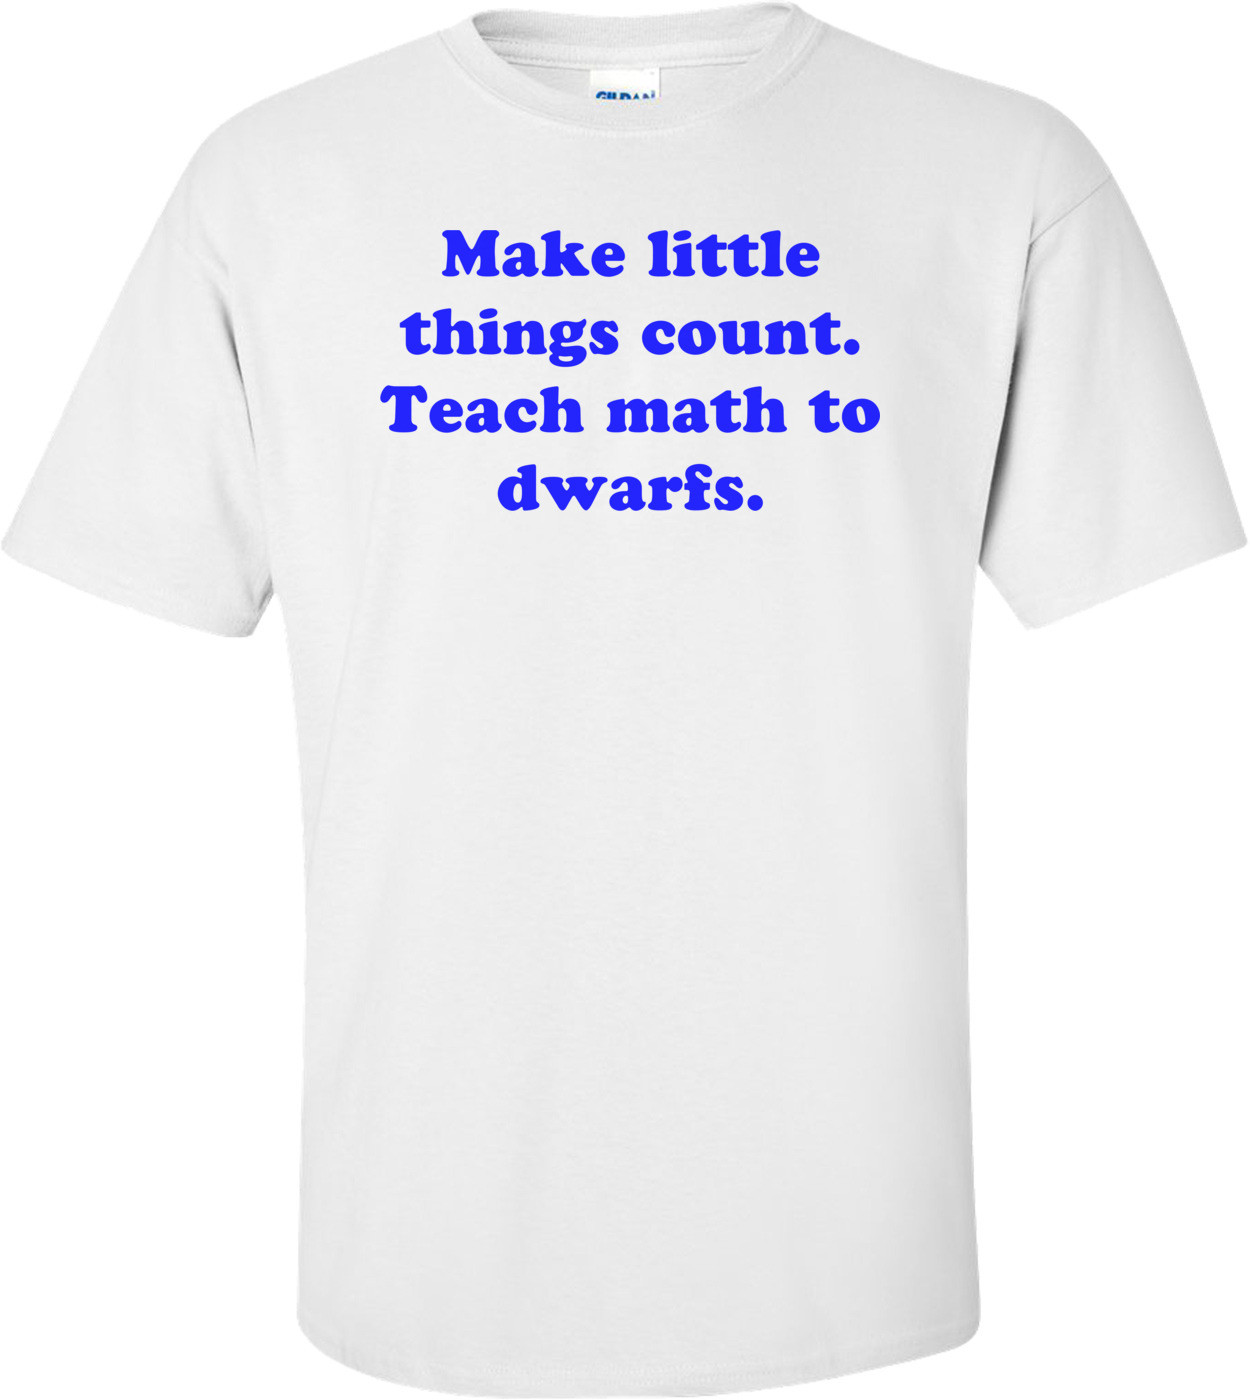 Make little things count. Teach math to dwarfs. Shirt